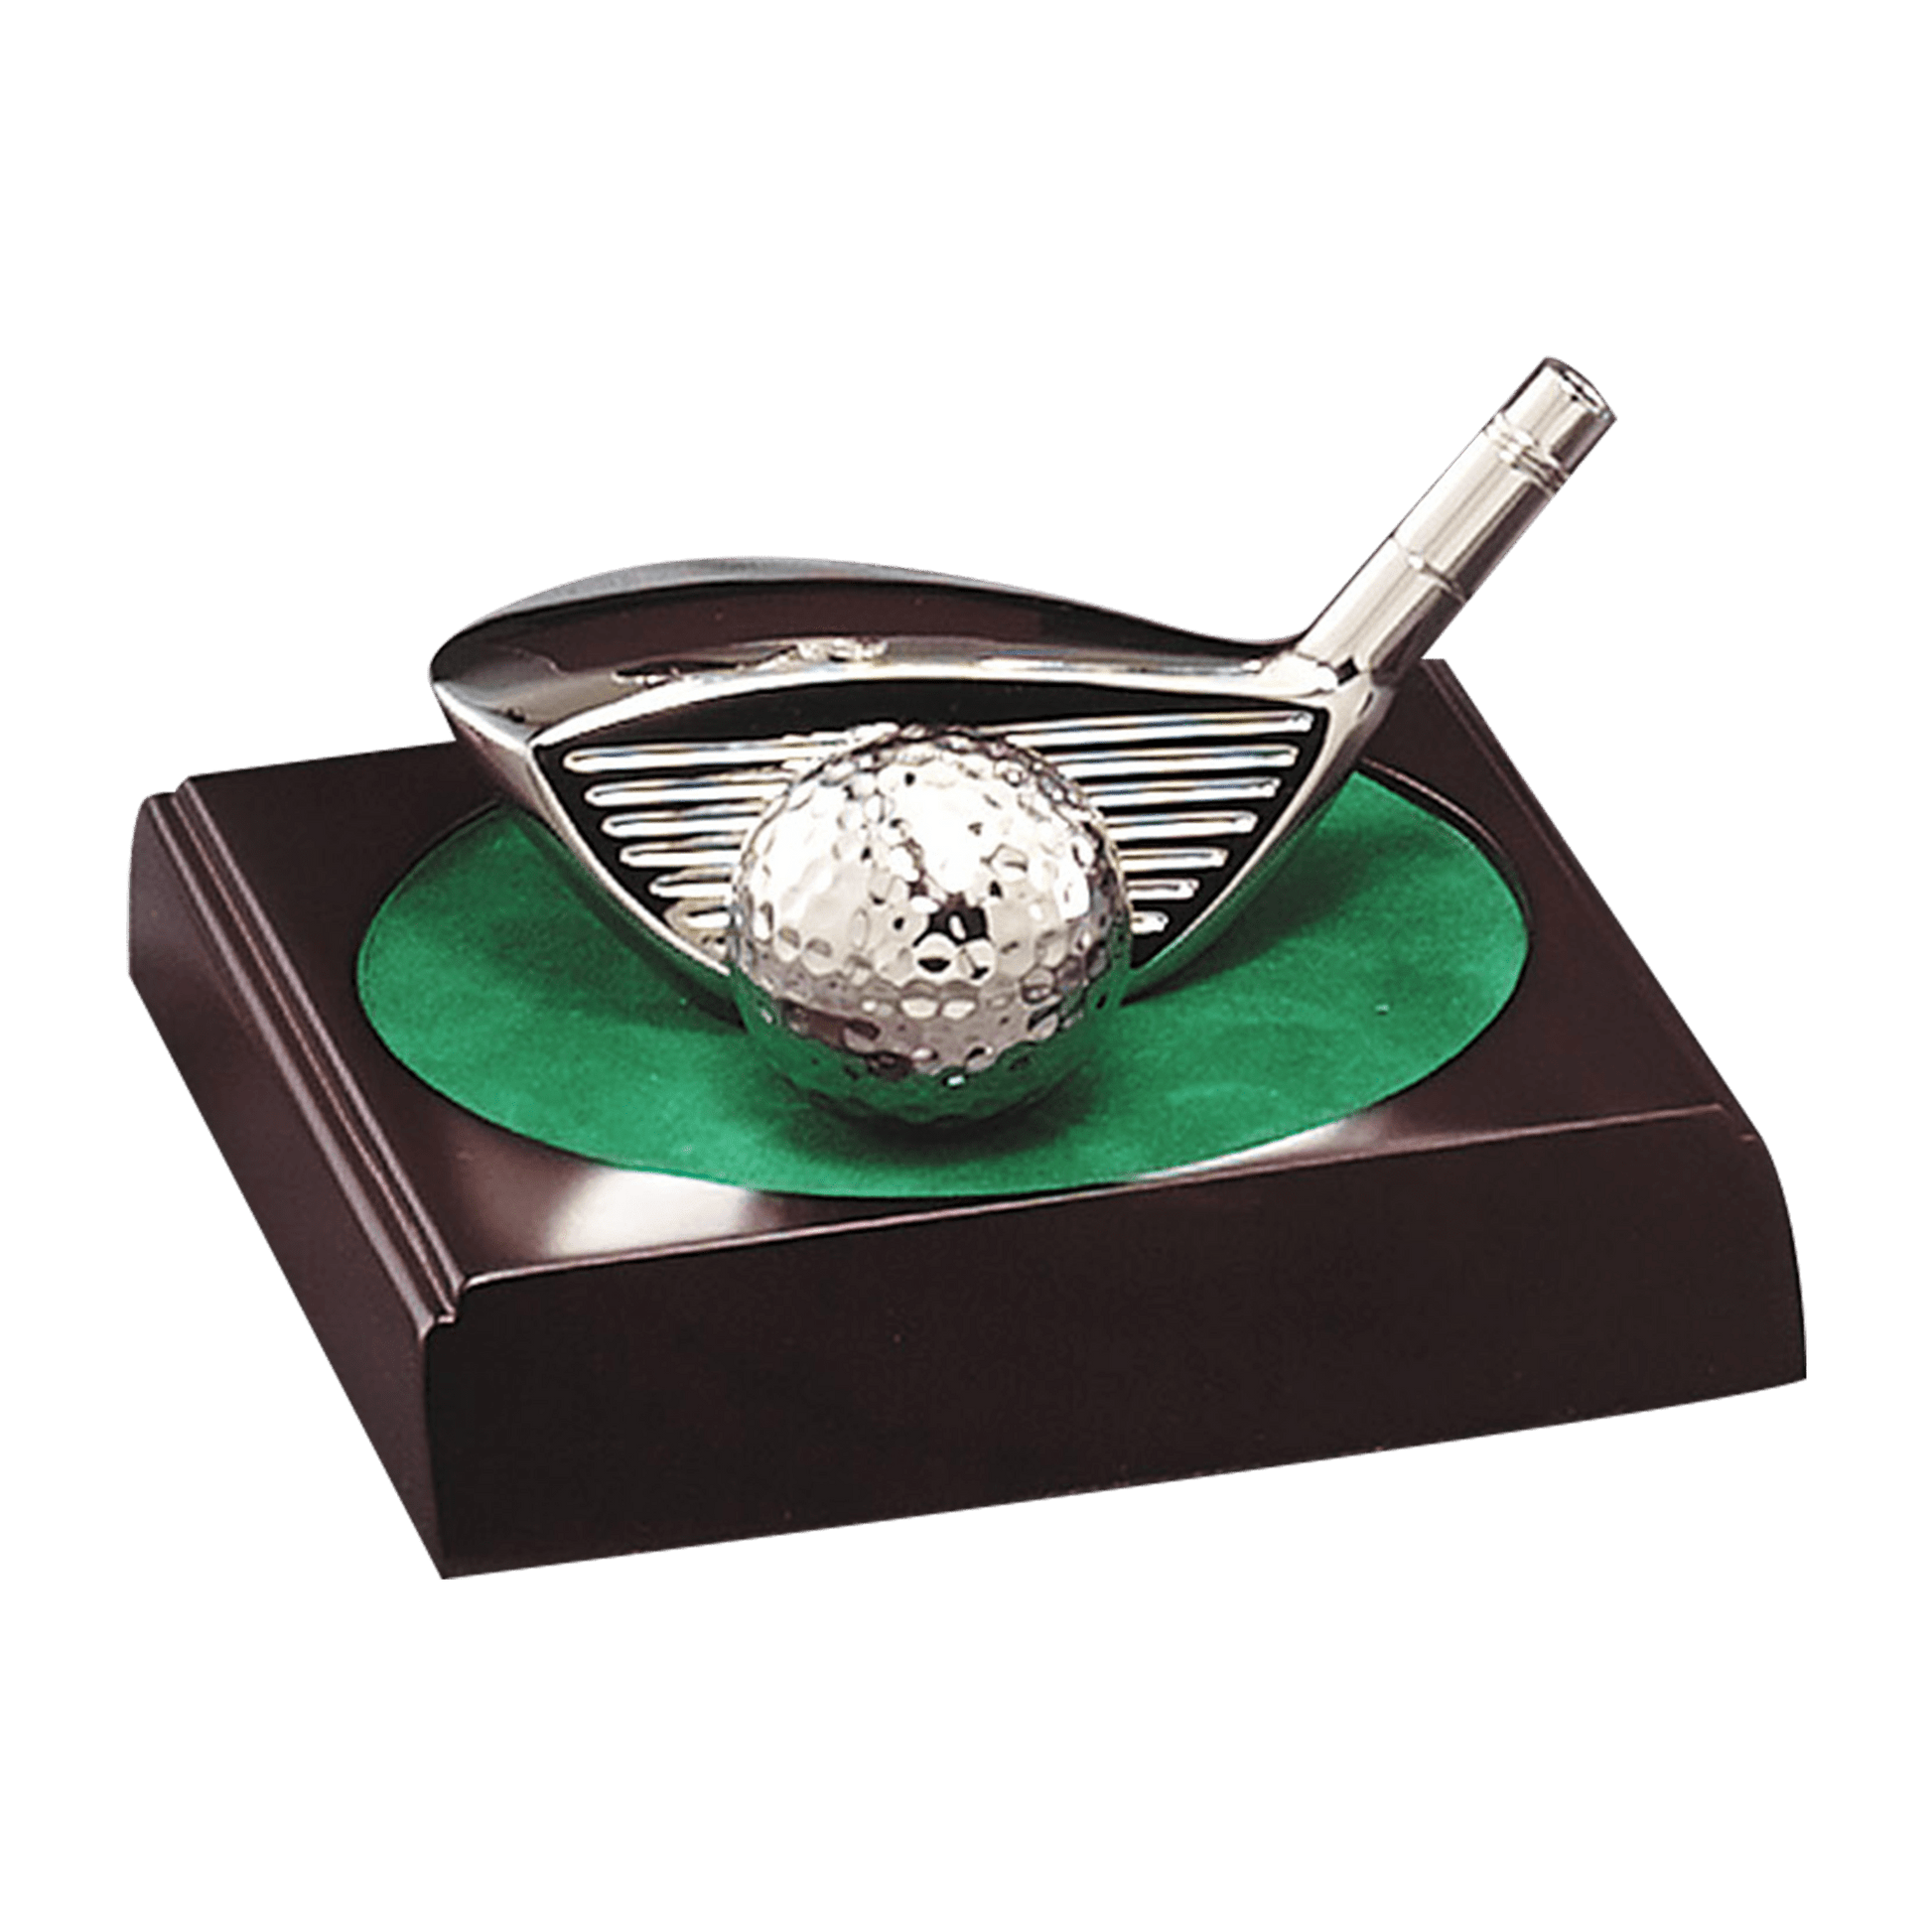 Golf Driver Trophy Troon Award - Whoa, Jody Boy!